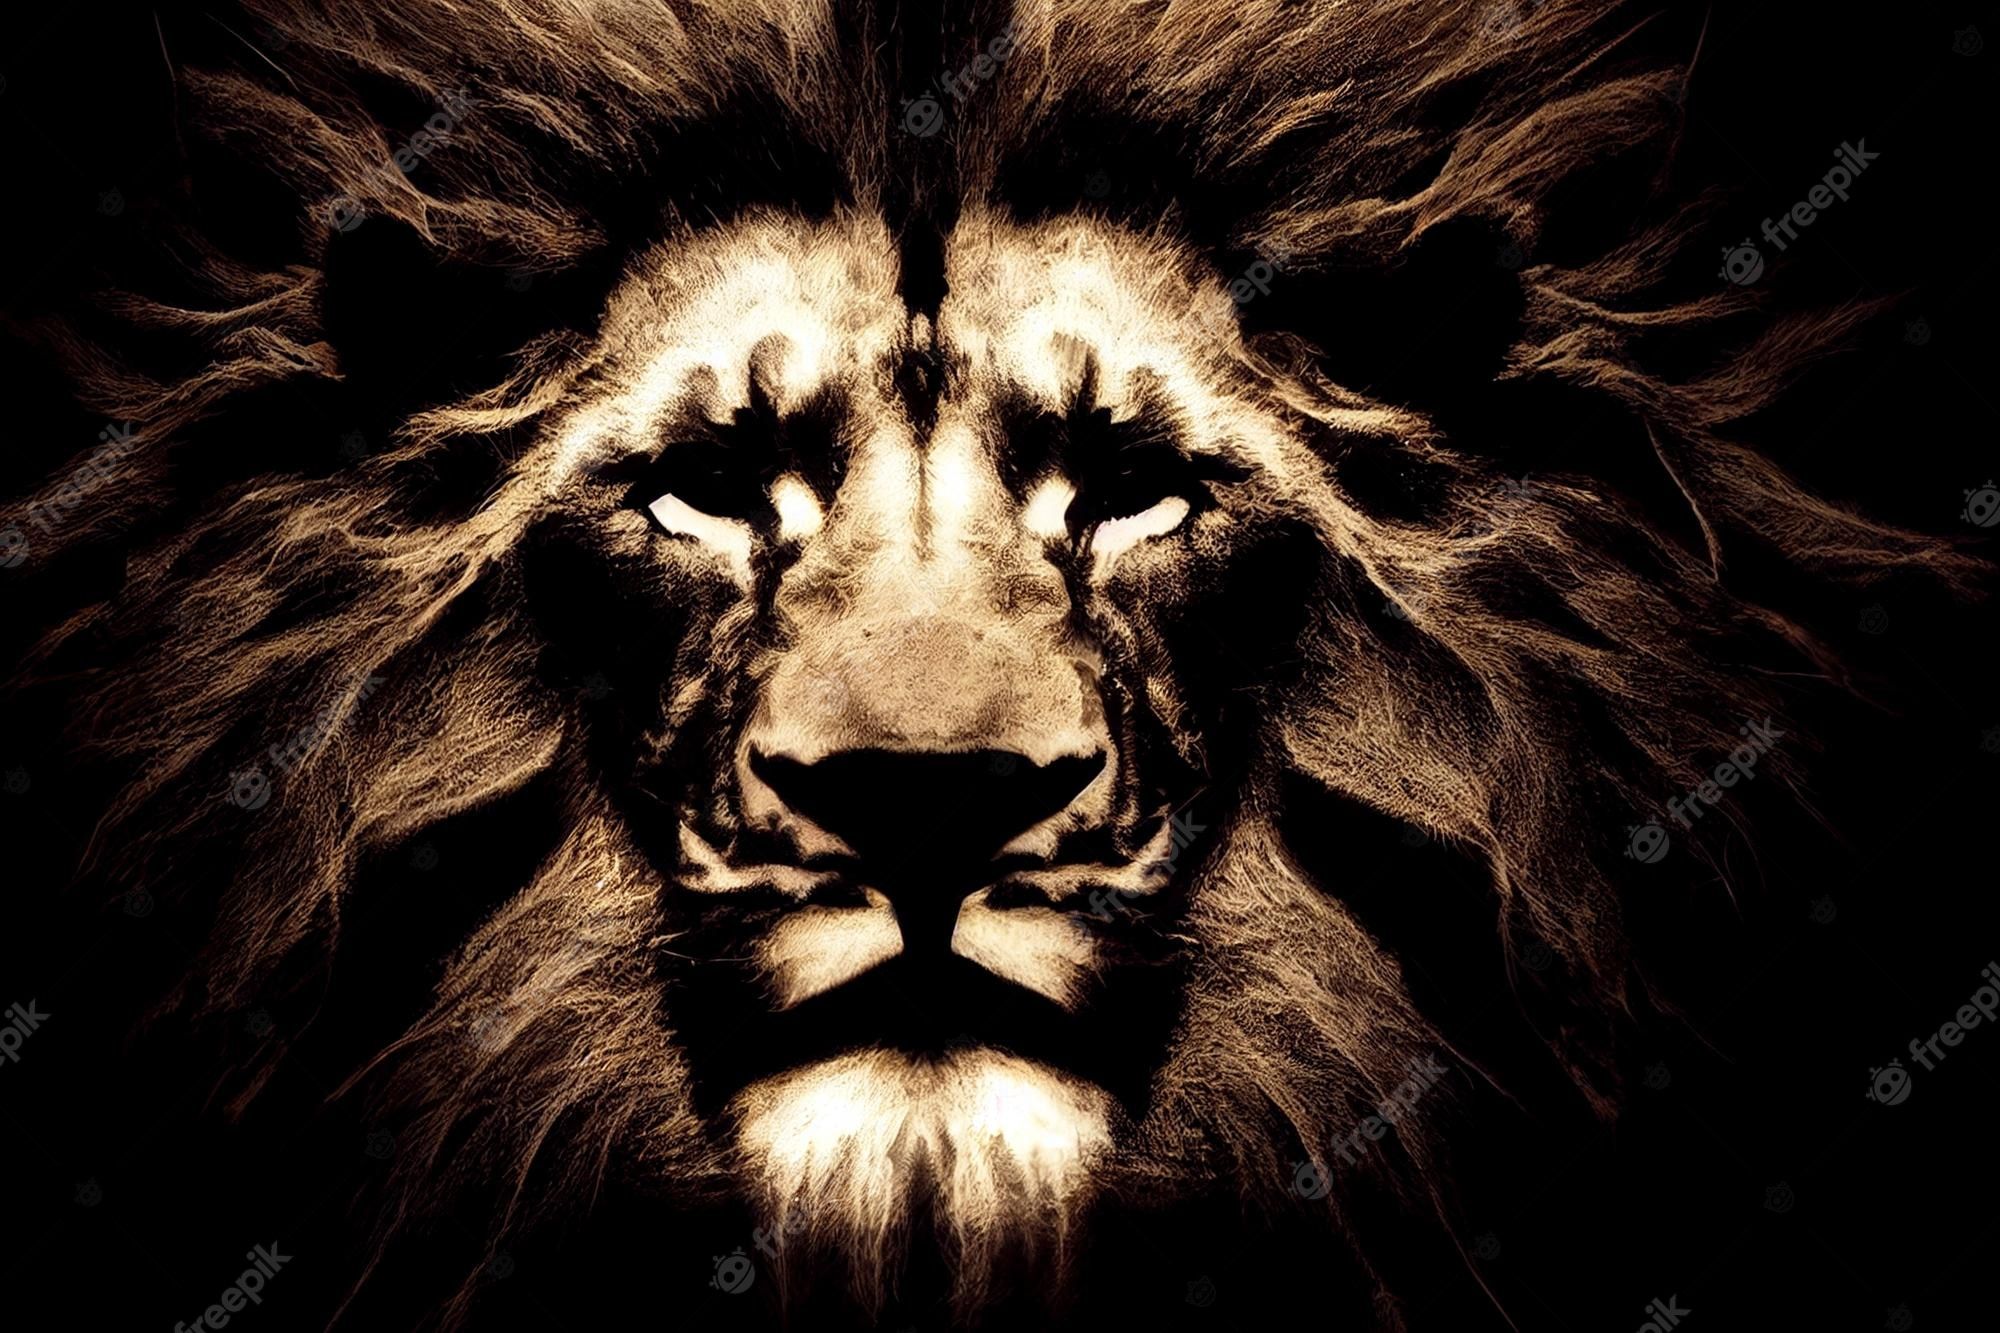 A lion's face with a black background - Lion